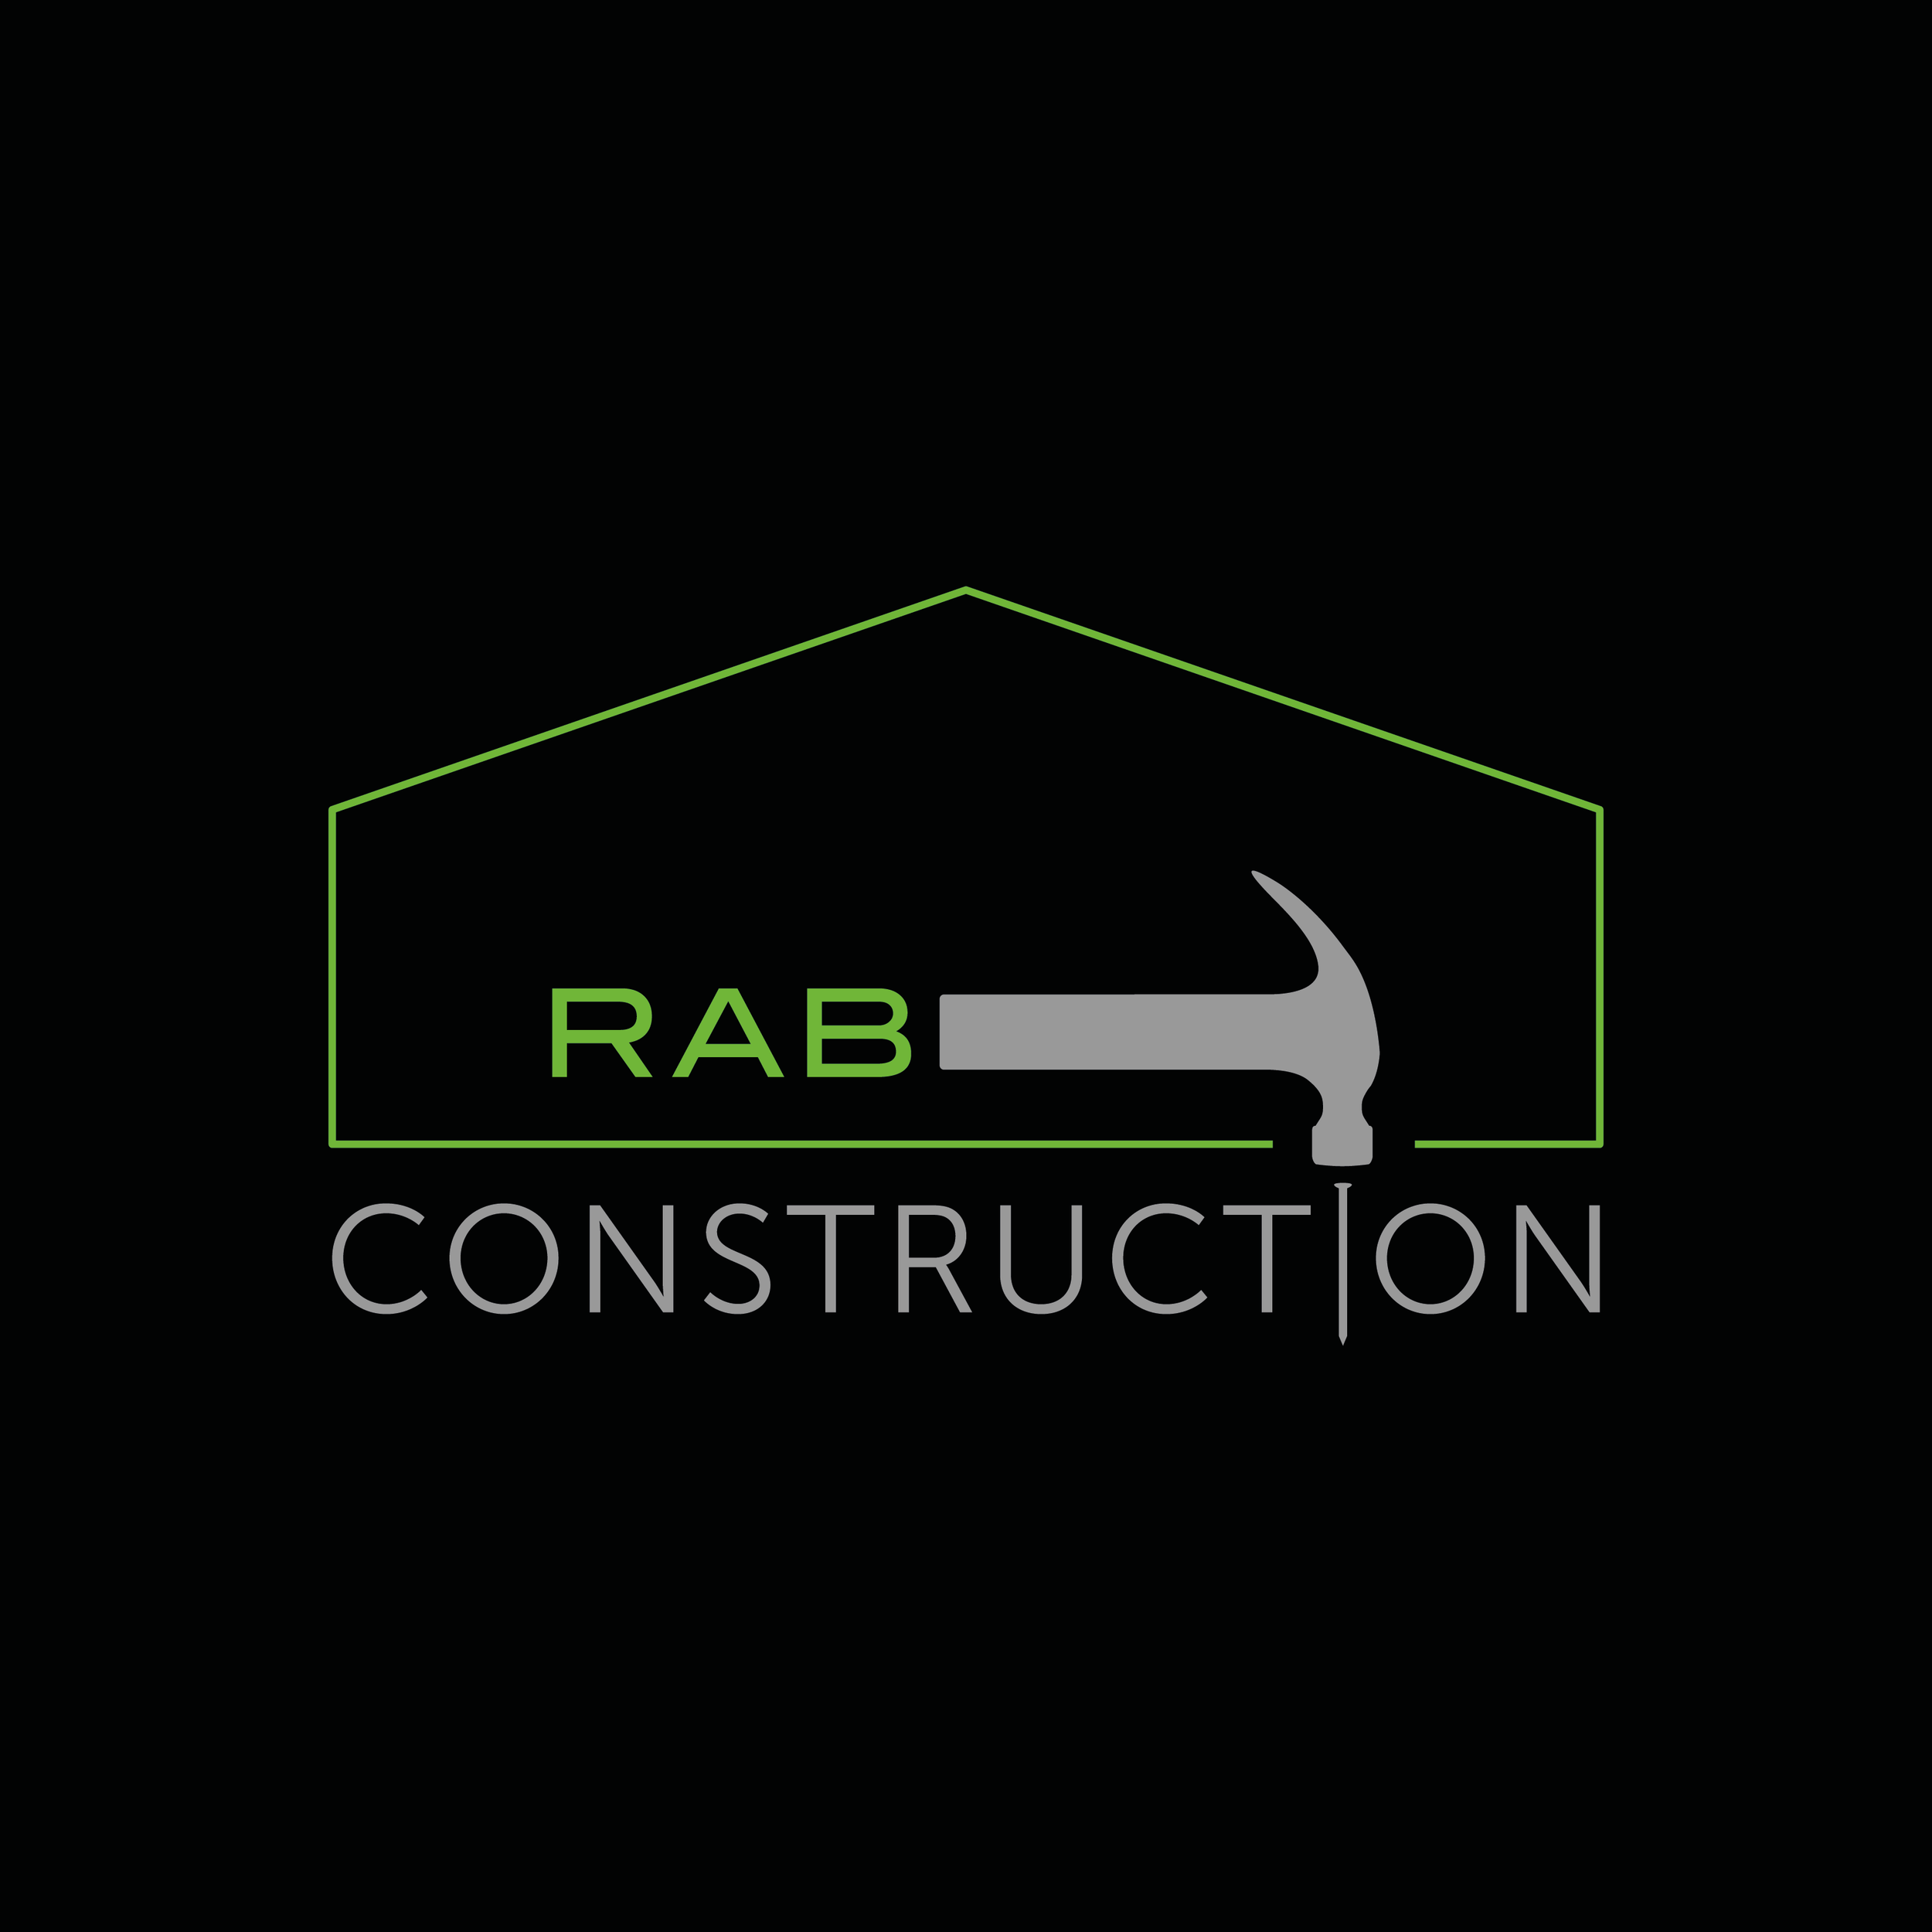 RAB Construction